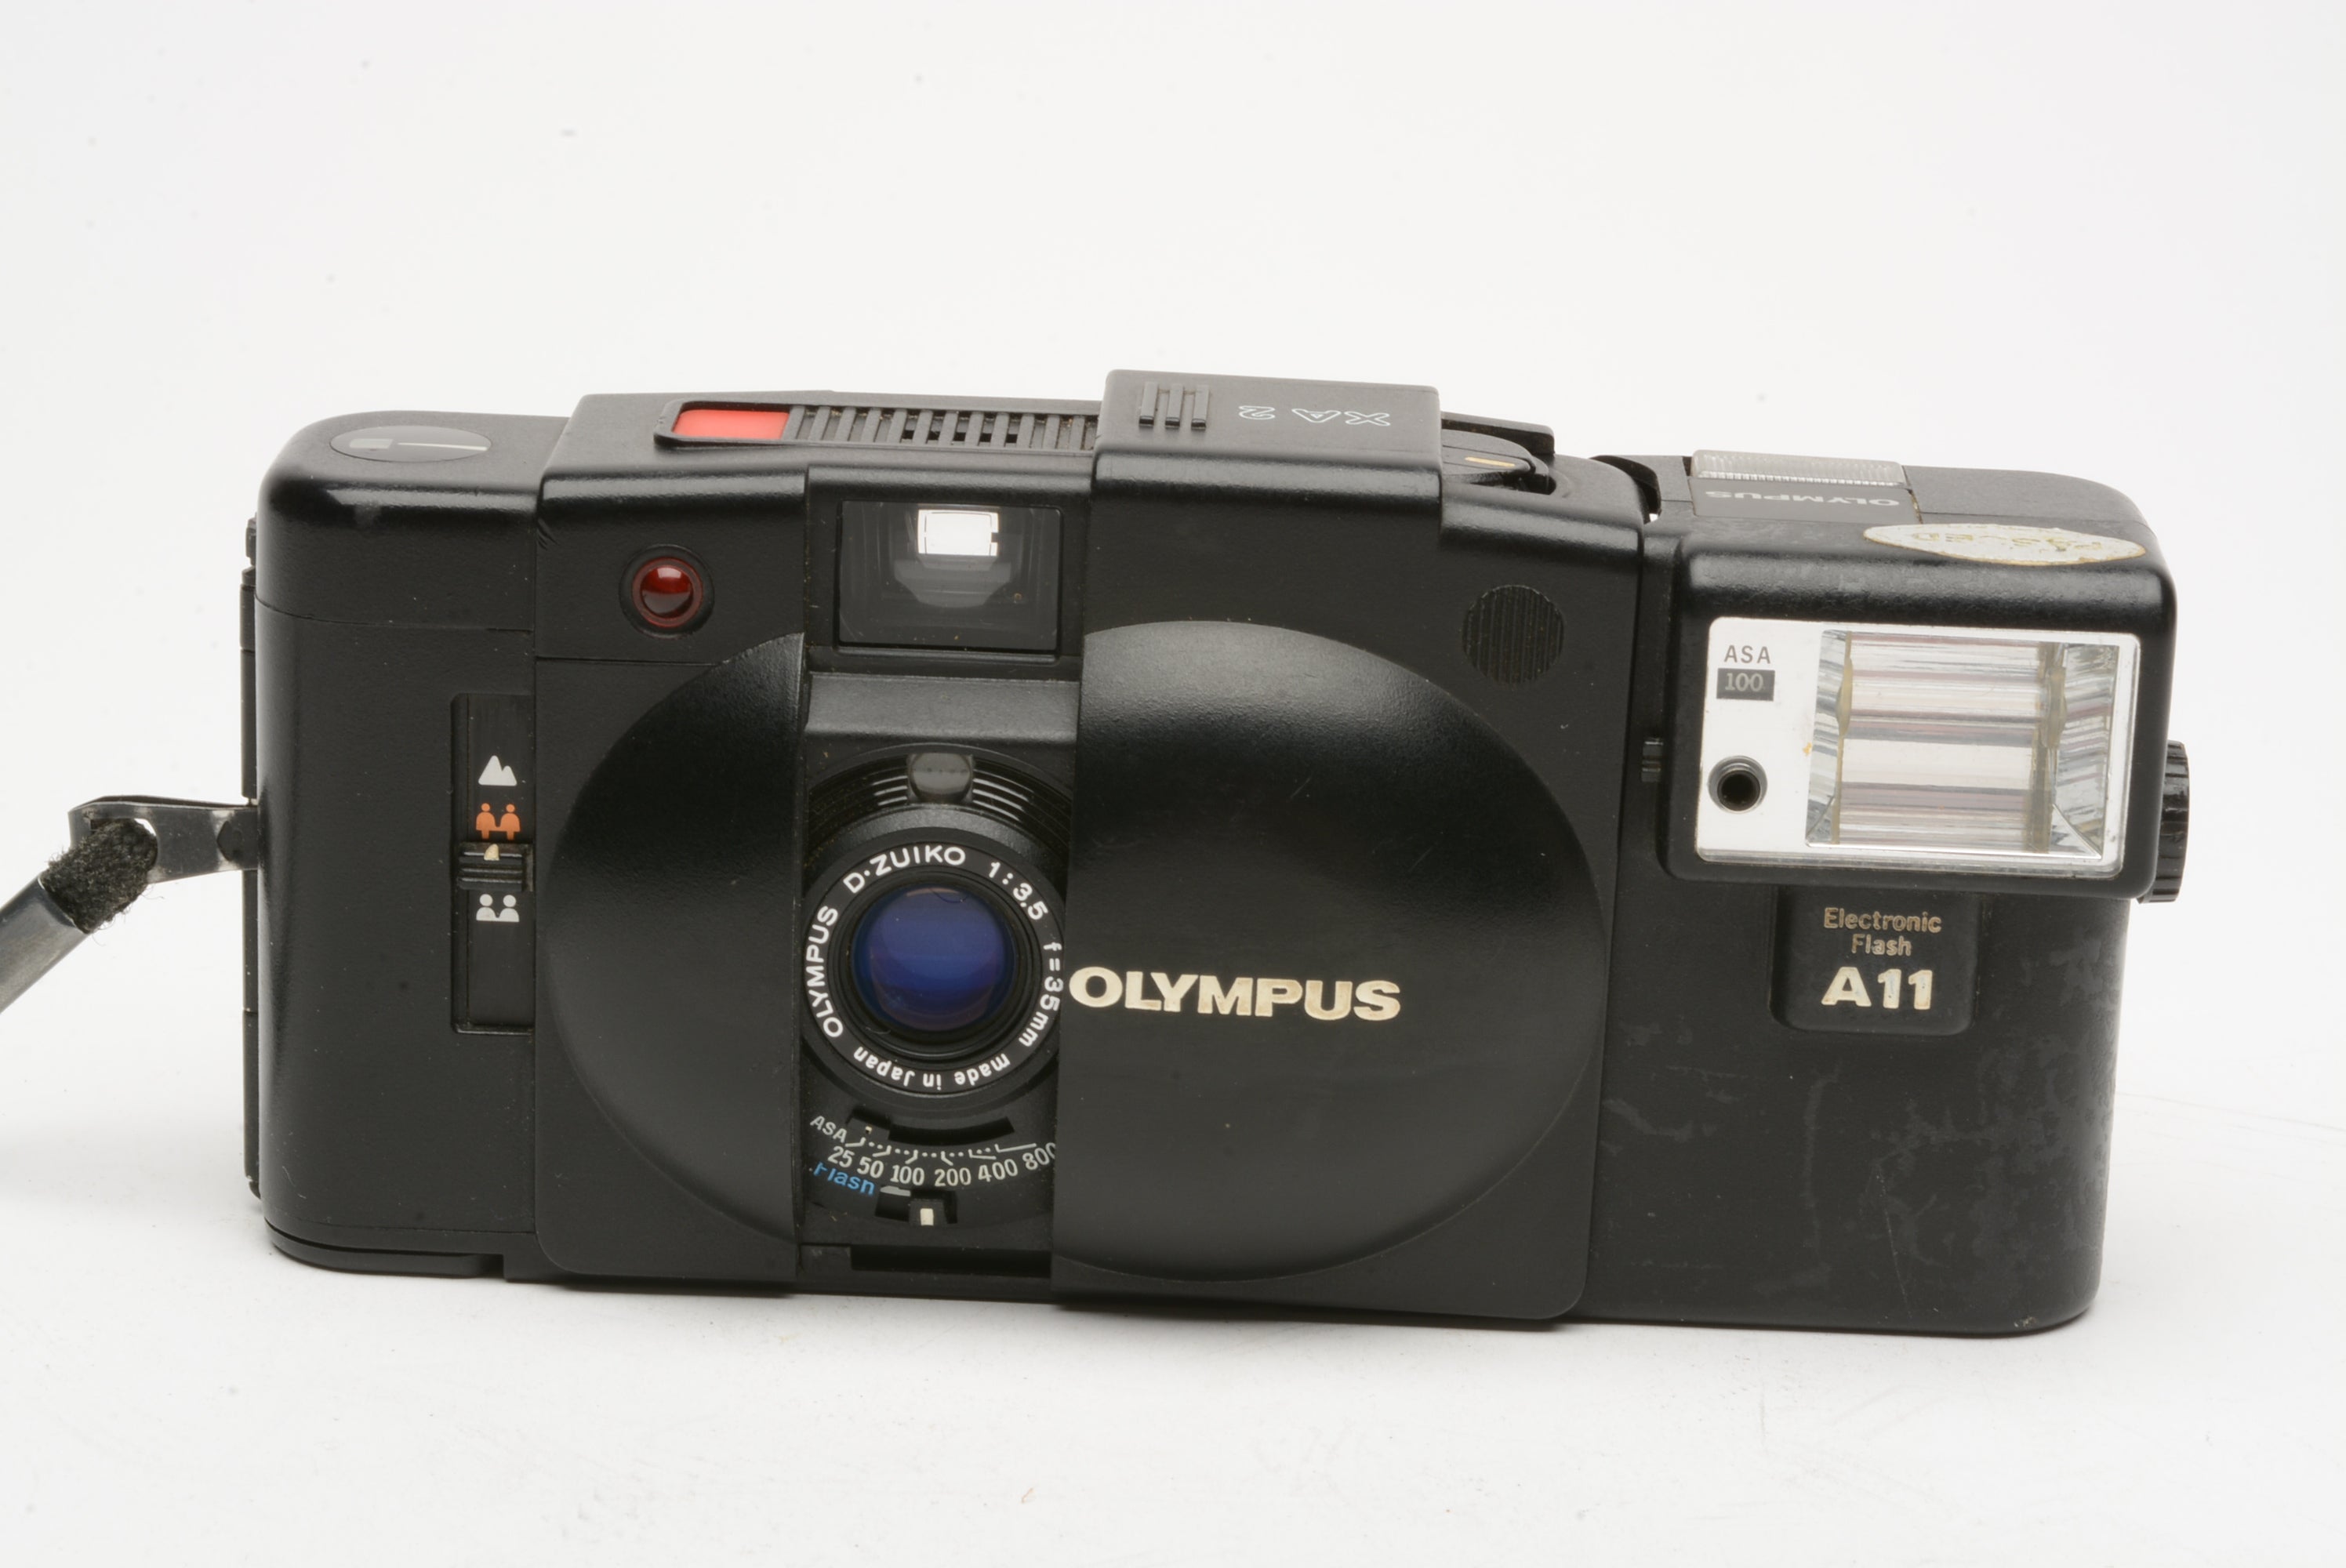 Olympus XA 2 w/A11 flash, new light seals, tested, great